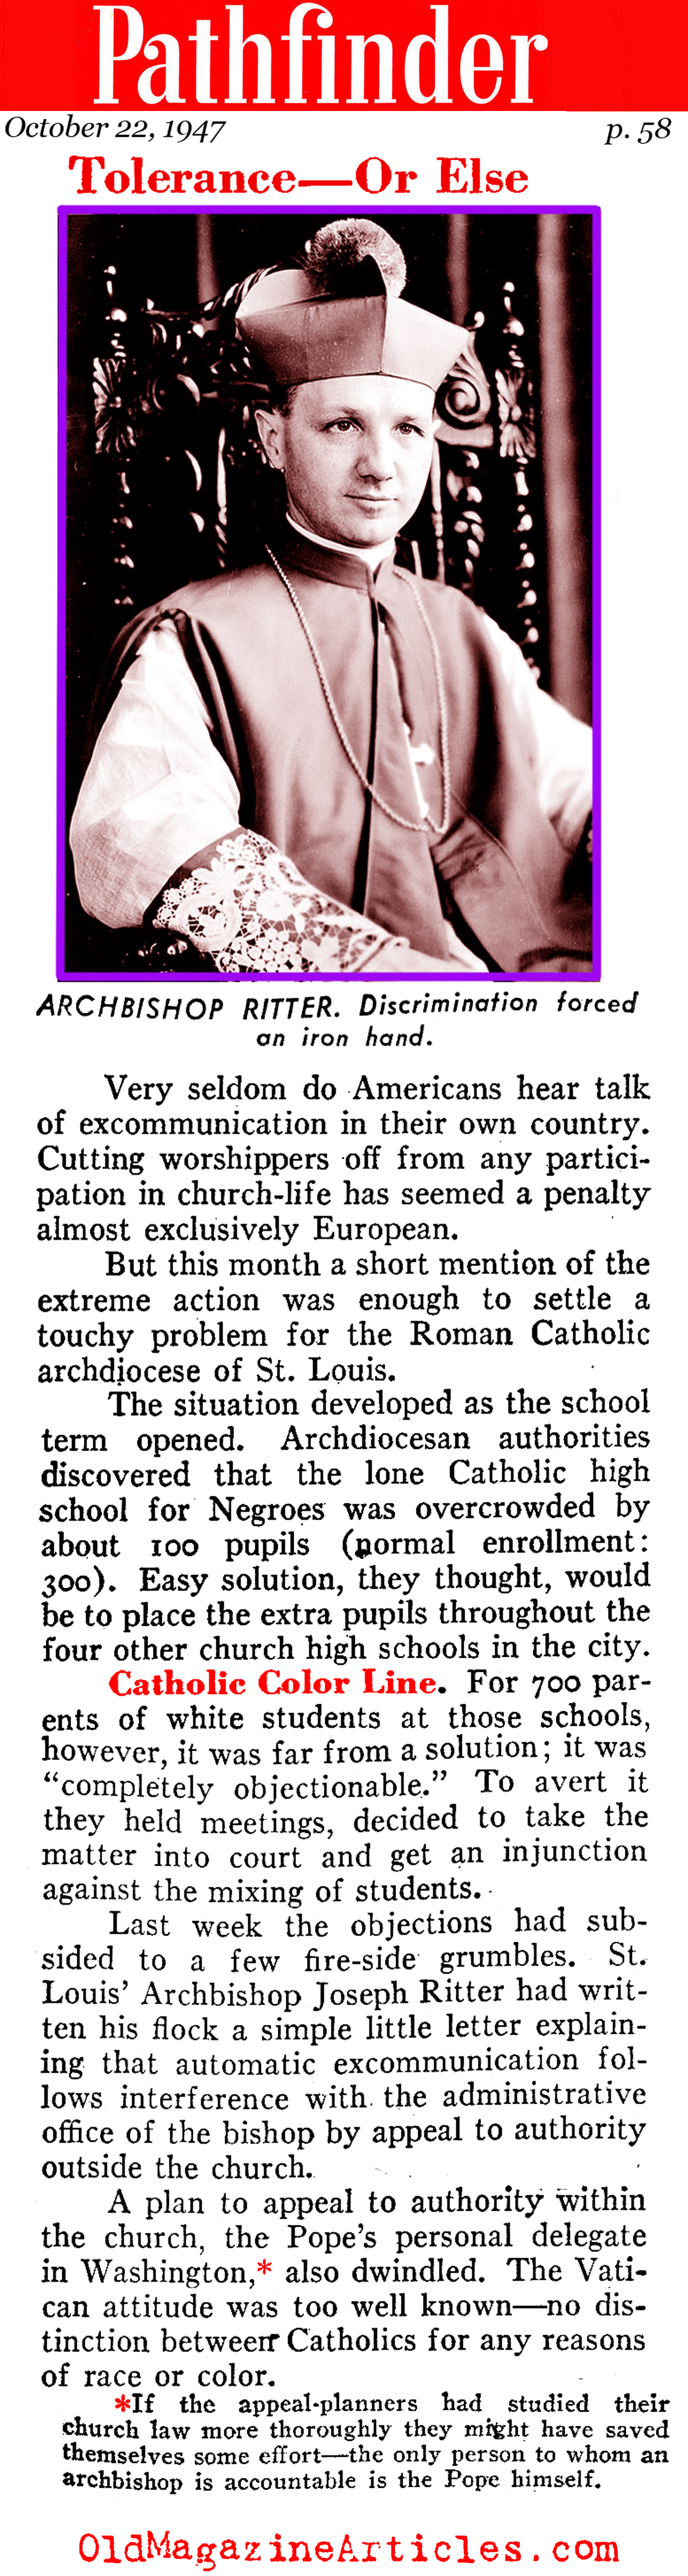 The Archbishop Did His Bit (Pathfinder Magazine, 1947)